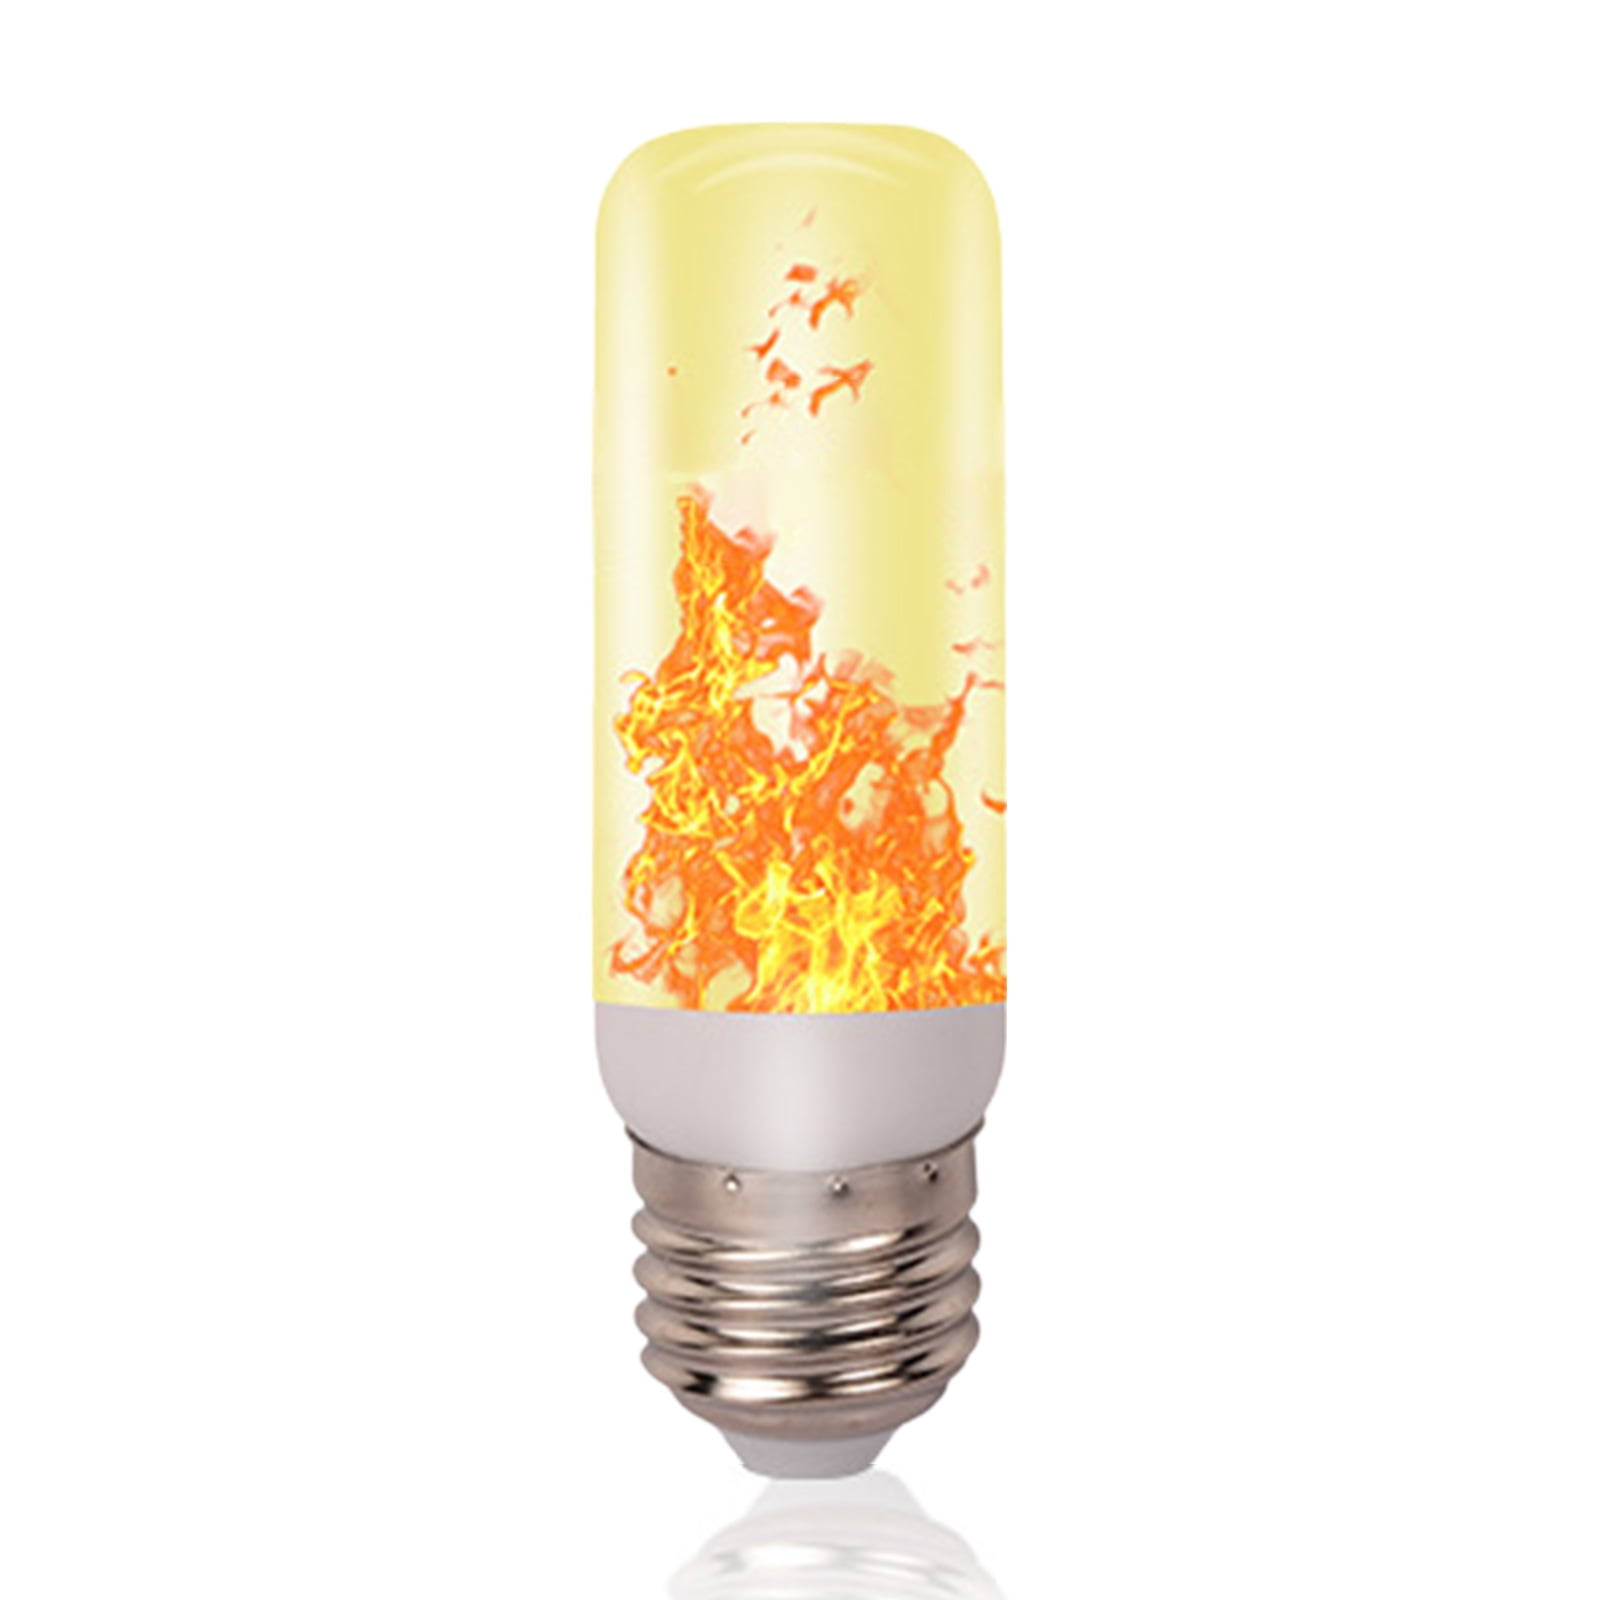 Kathy LED Flame Fire Light Bulbs E26 E27 Upside Down Effect Simulated Decorative Lights Atmosphere Lighting Romantic Flaming Bulb